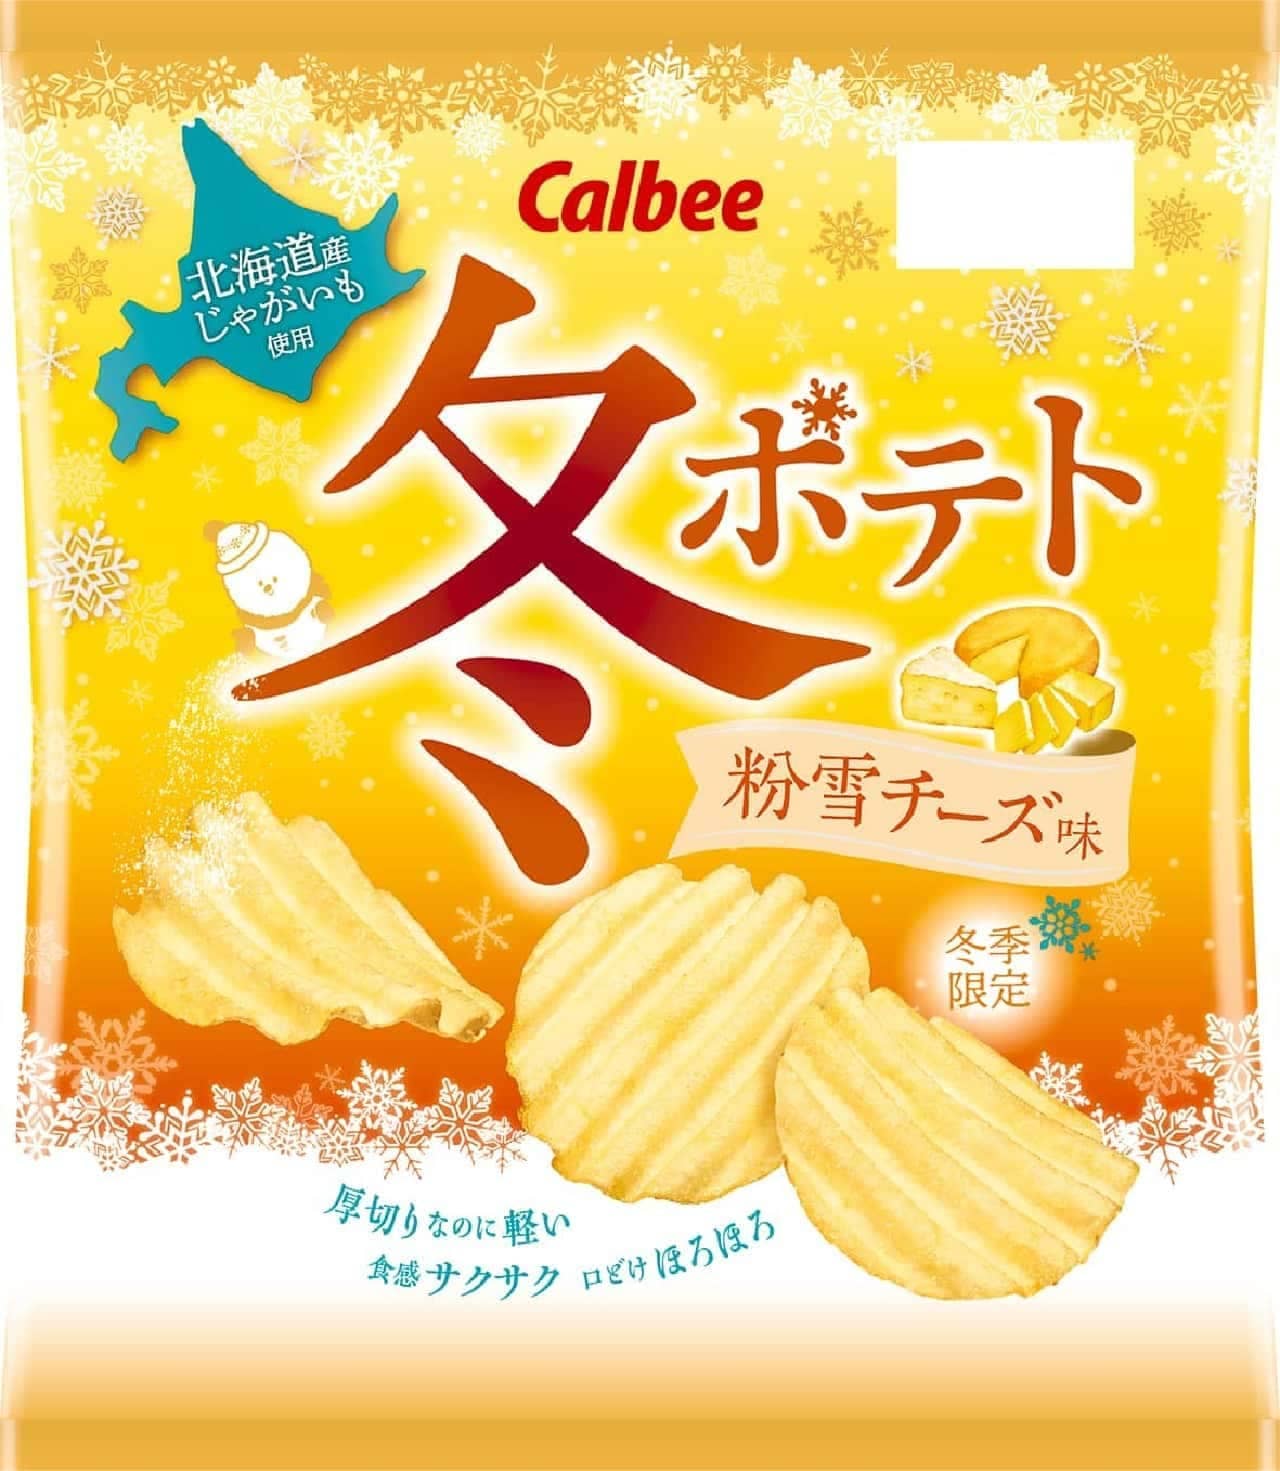 Calbee "Winter Potato Powdered Snow Cheese Flavor"